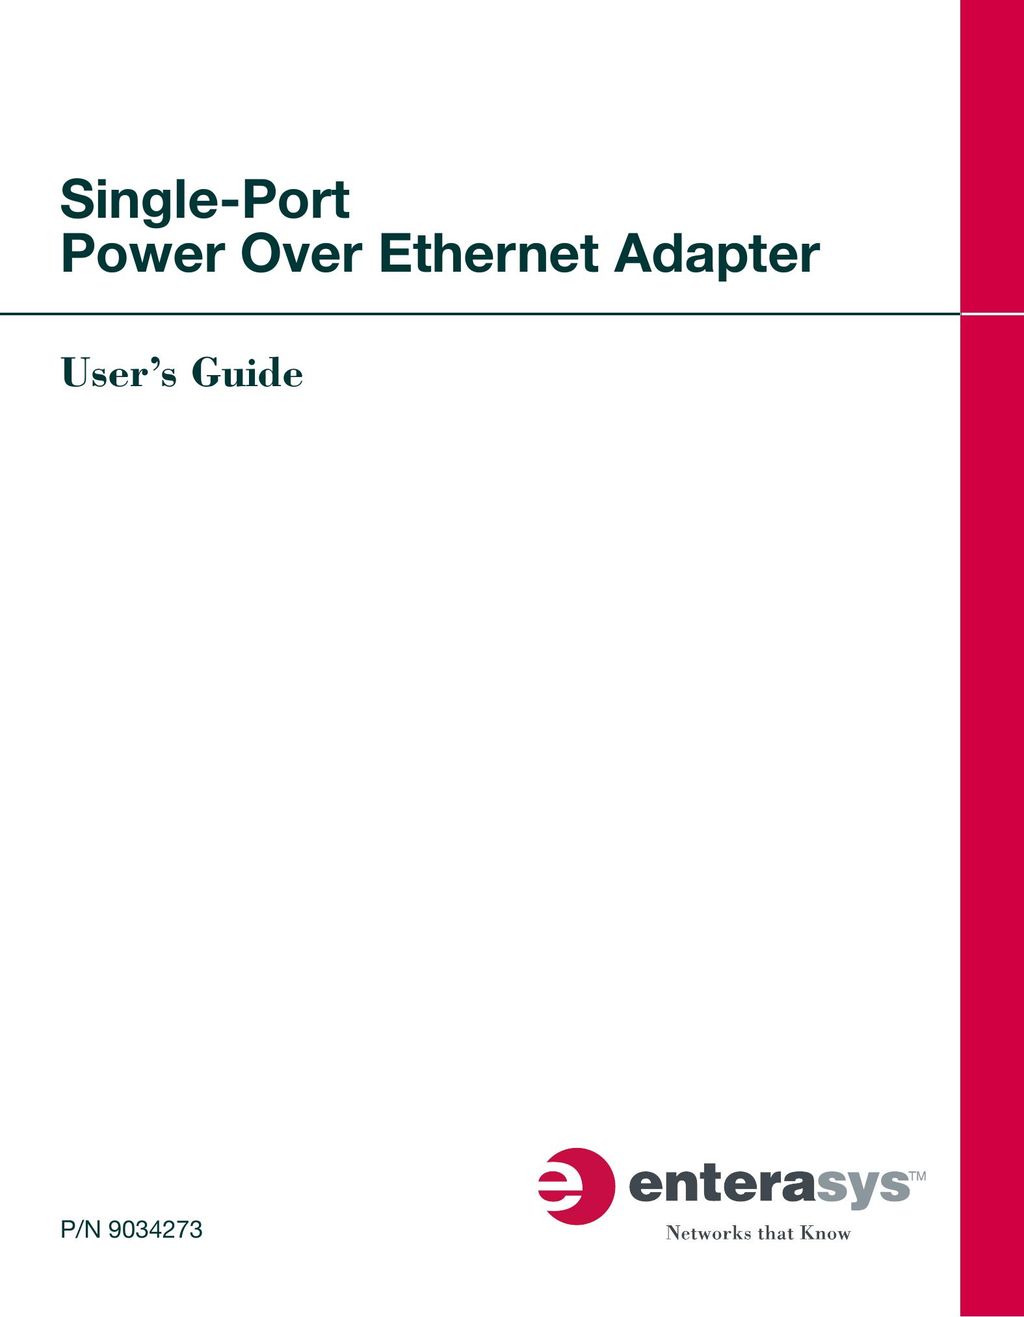 Enterasys Networks BL-69551ENT Network Card User Manual